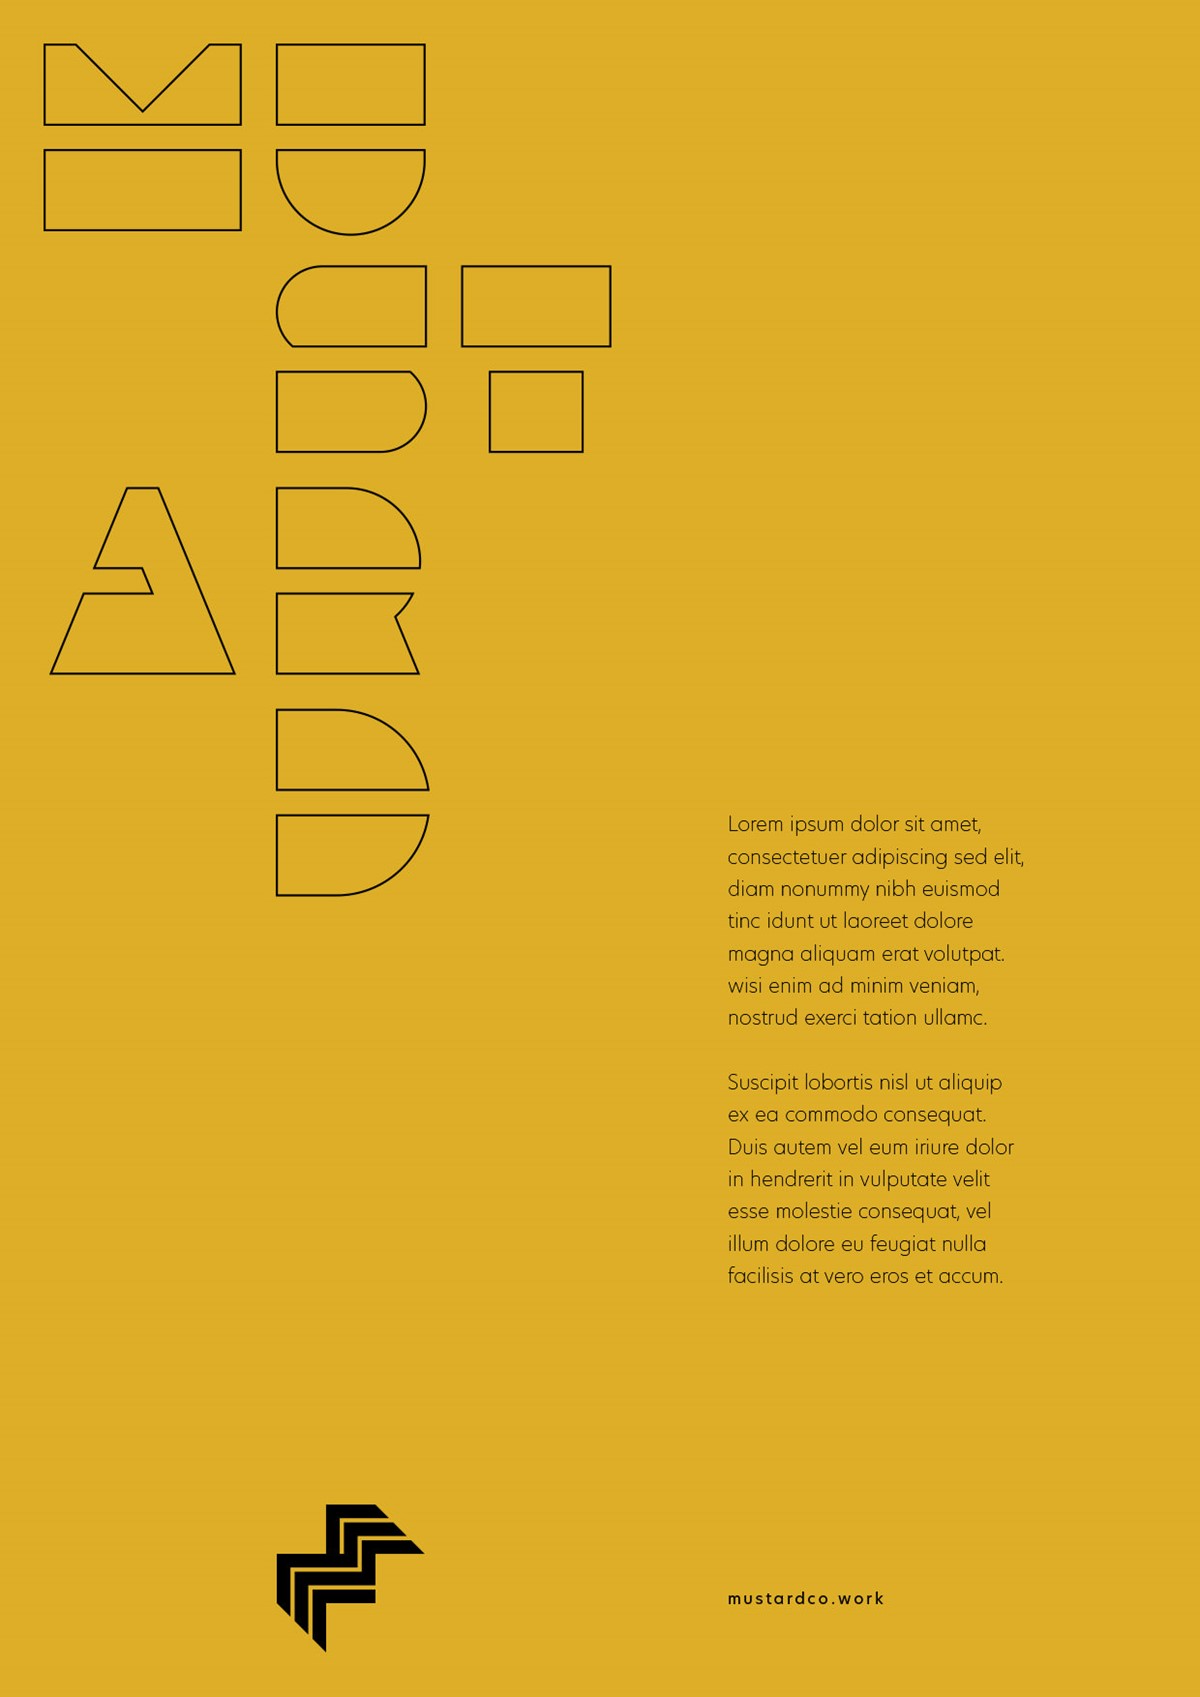 Mustard. Brand identity. Typographic layout. Design by Superfried.